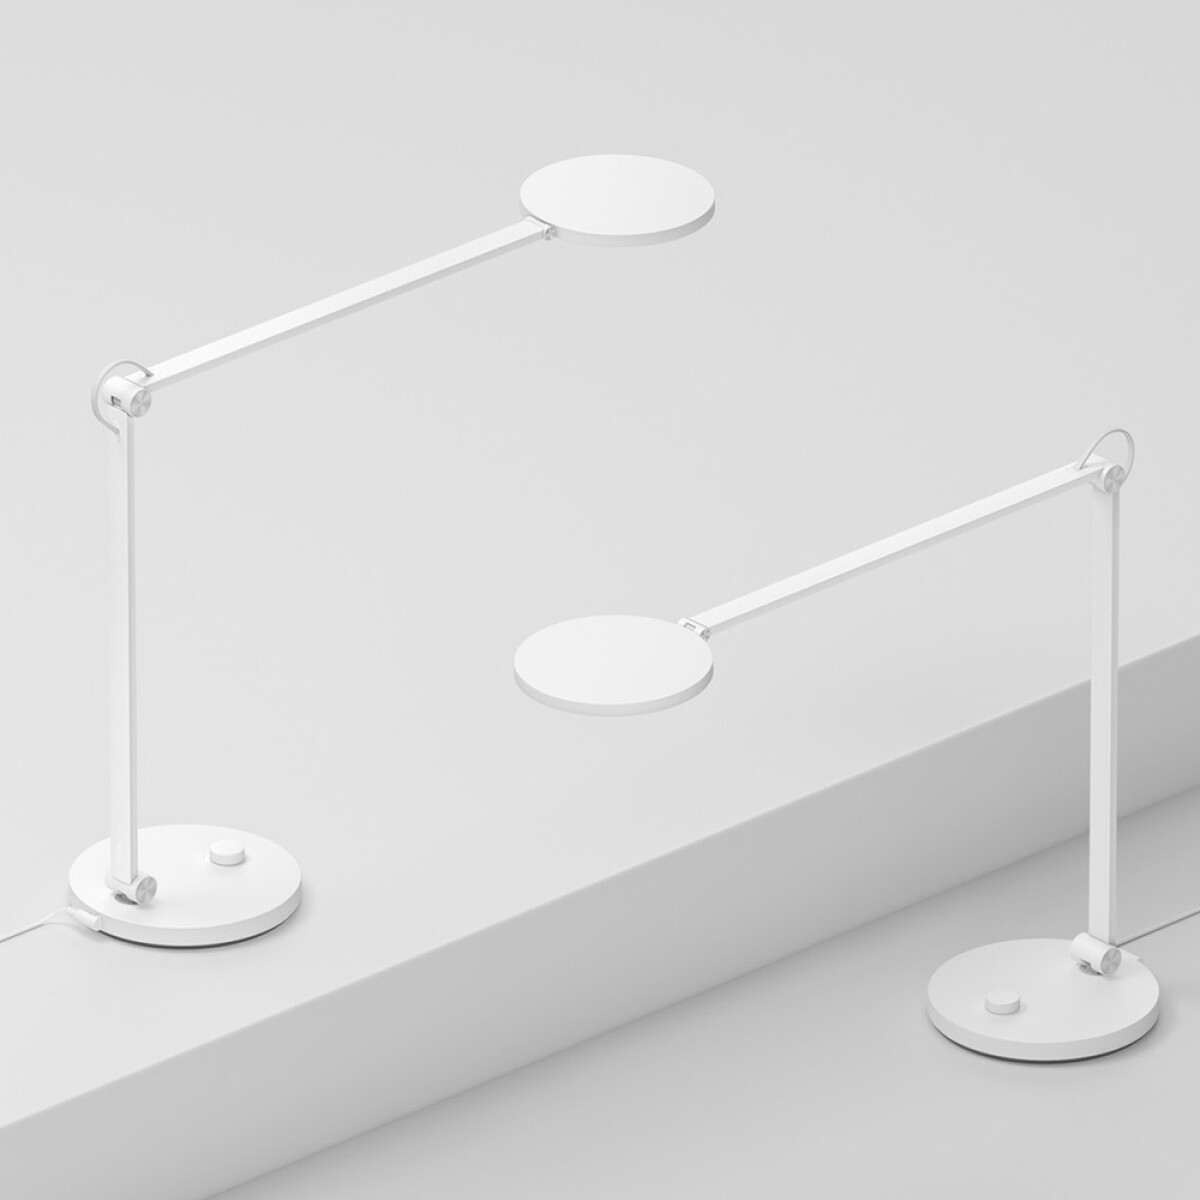 Mi smart led desk lamp pro xiaomi | lampara de escritorio smart Blanca